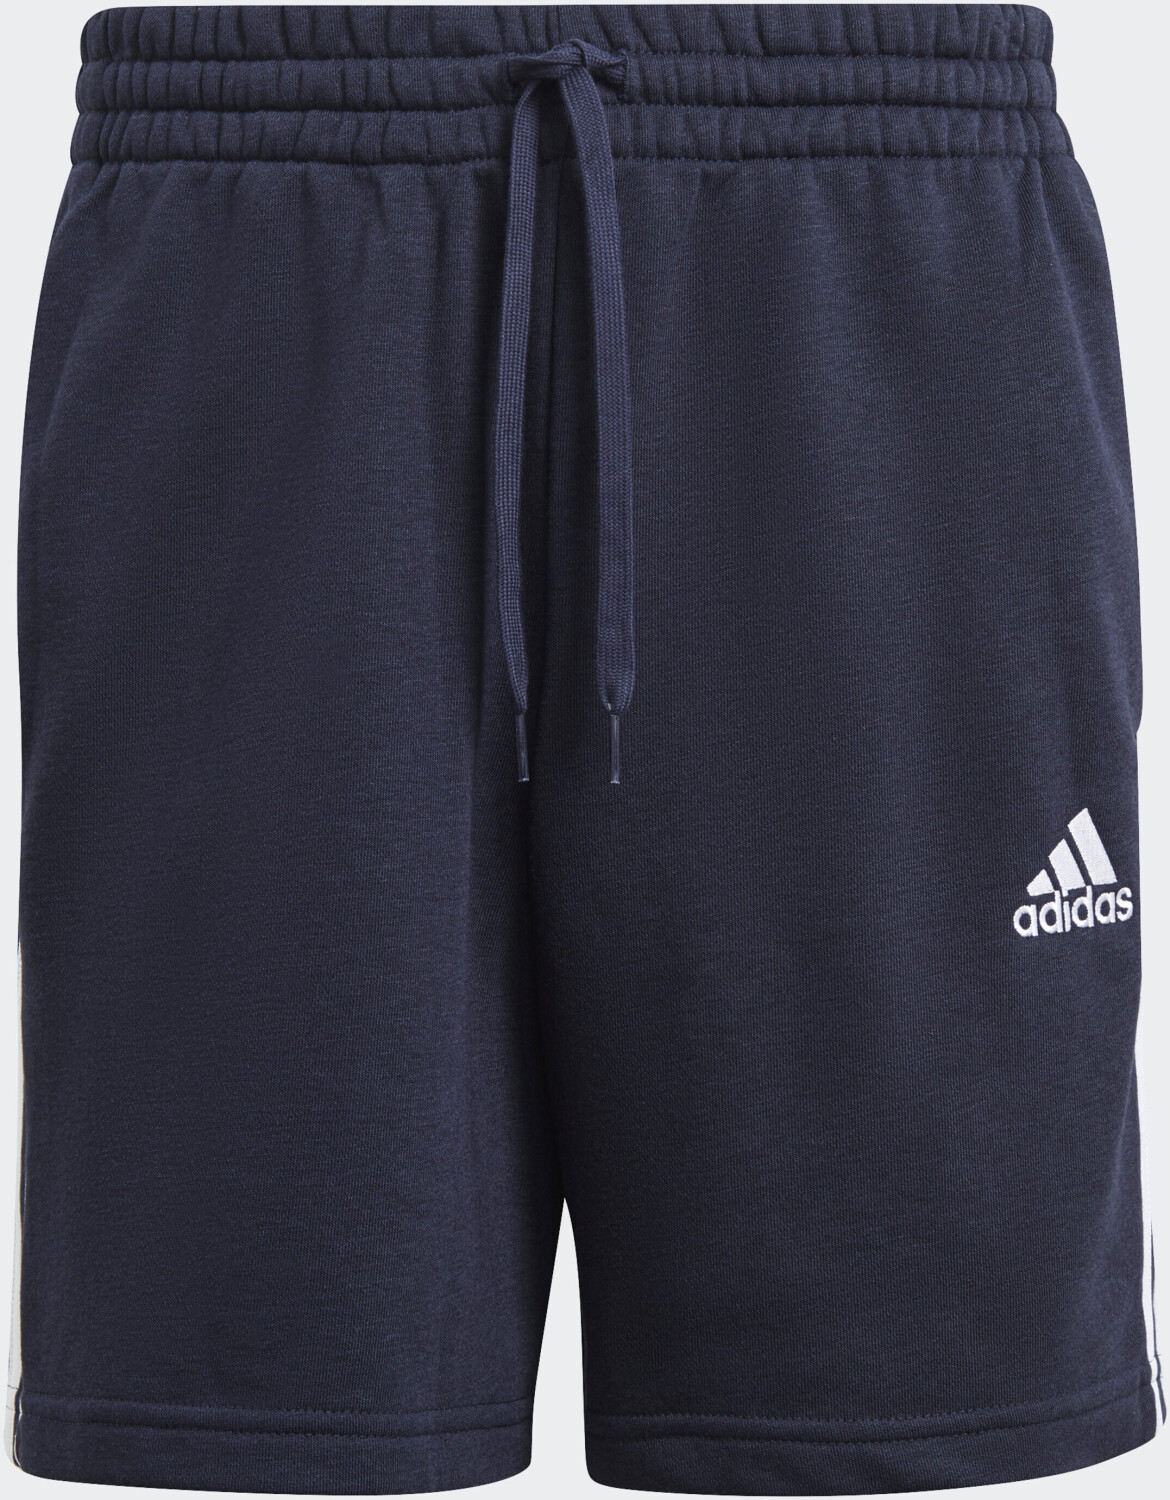 Adidas Essentials French Terry 3-Stripes Shorts ab 15,95 € | Preisvergleich  bei